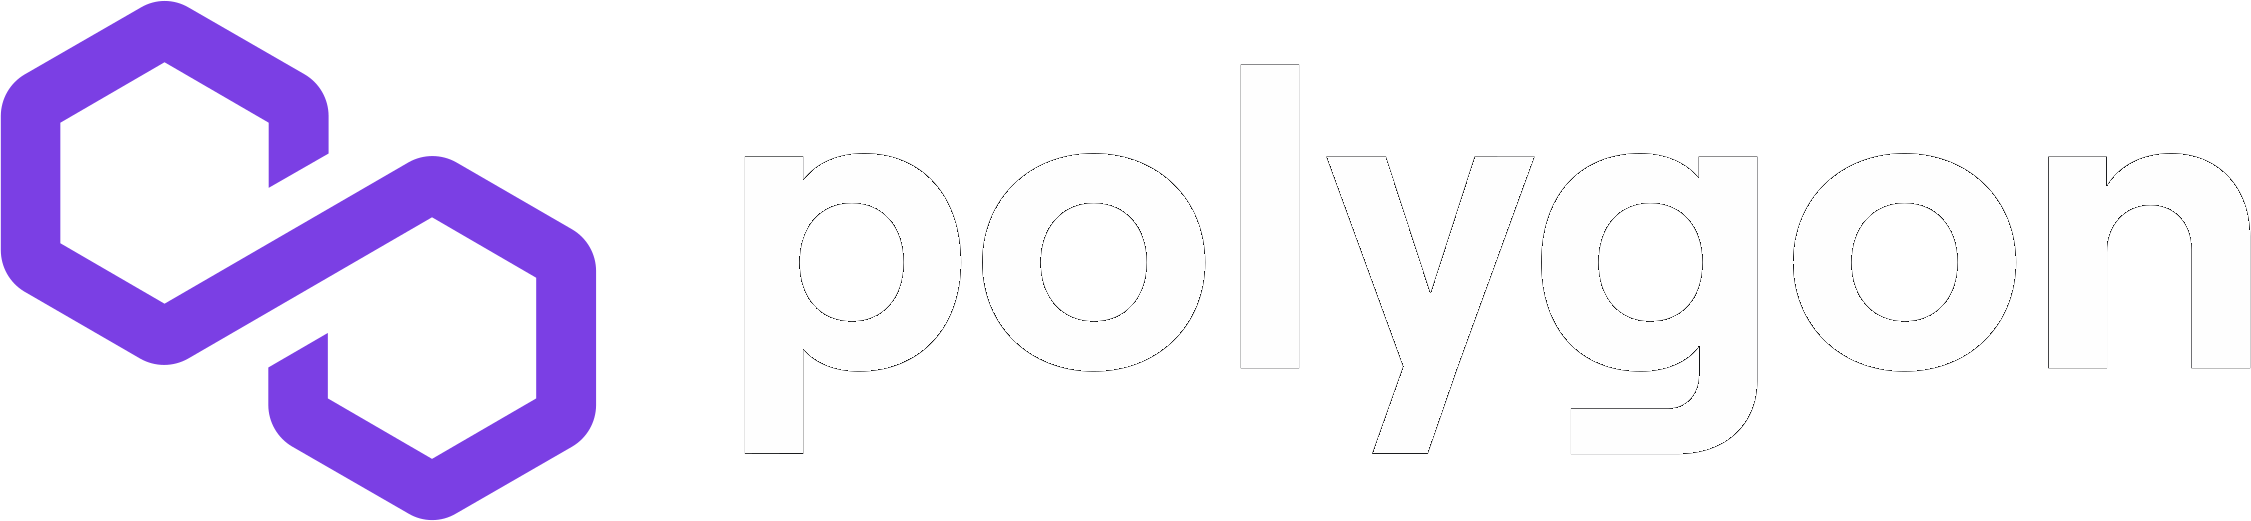 Polygon Blockchain Logo